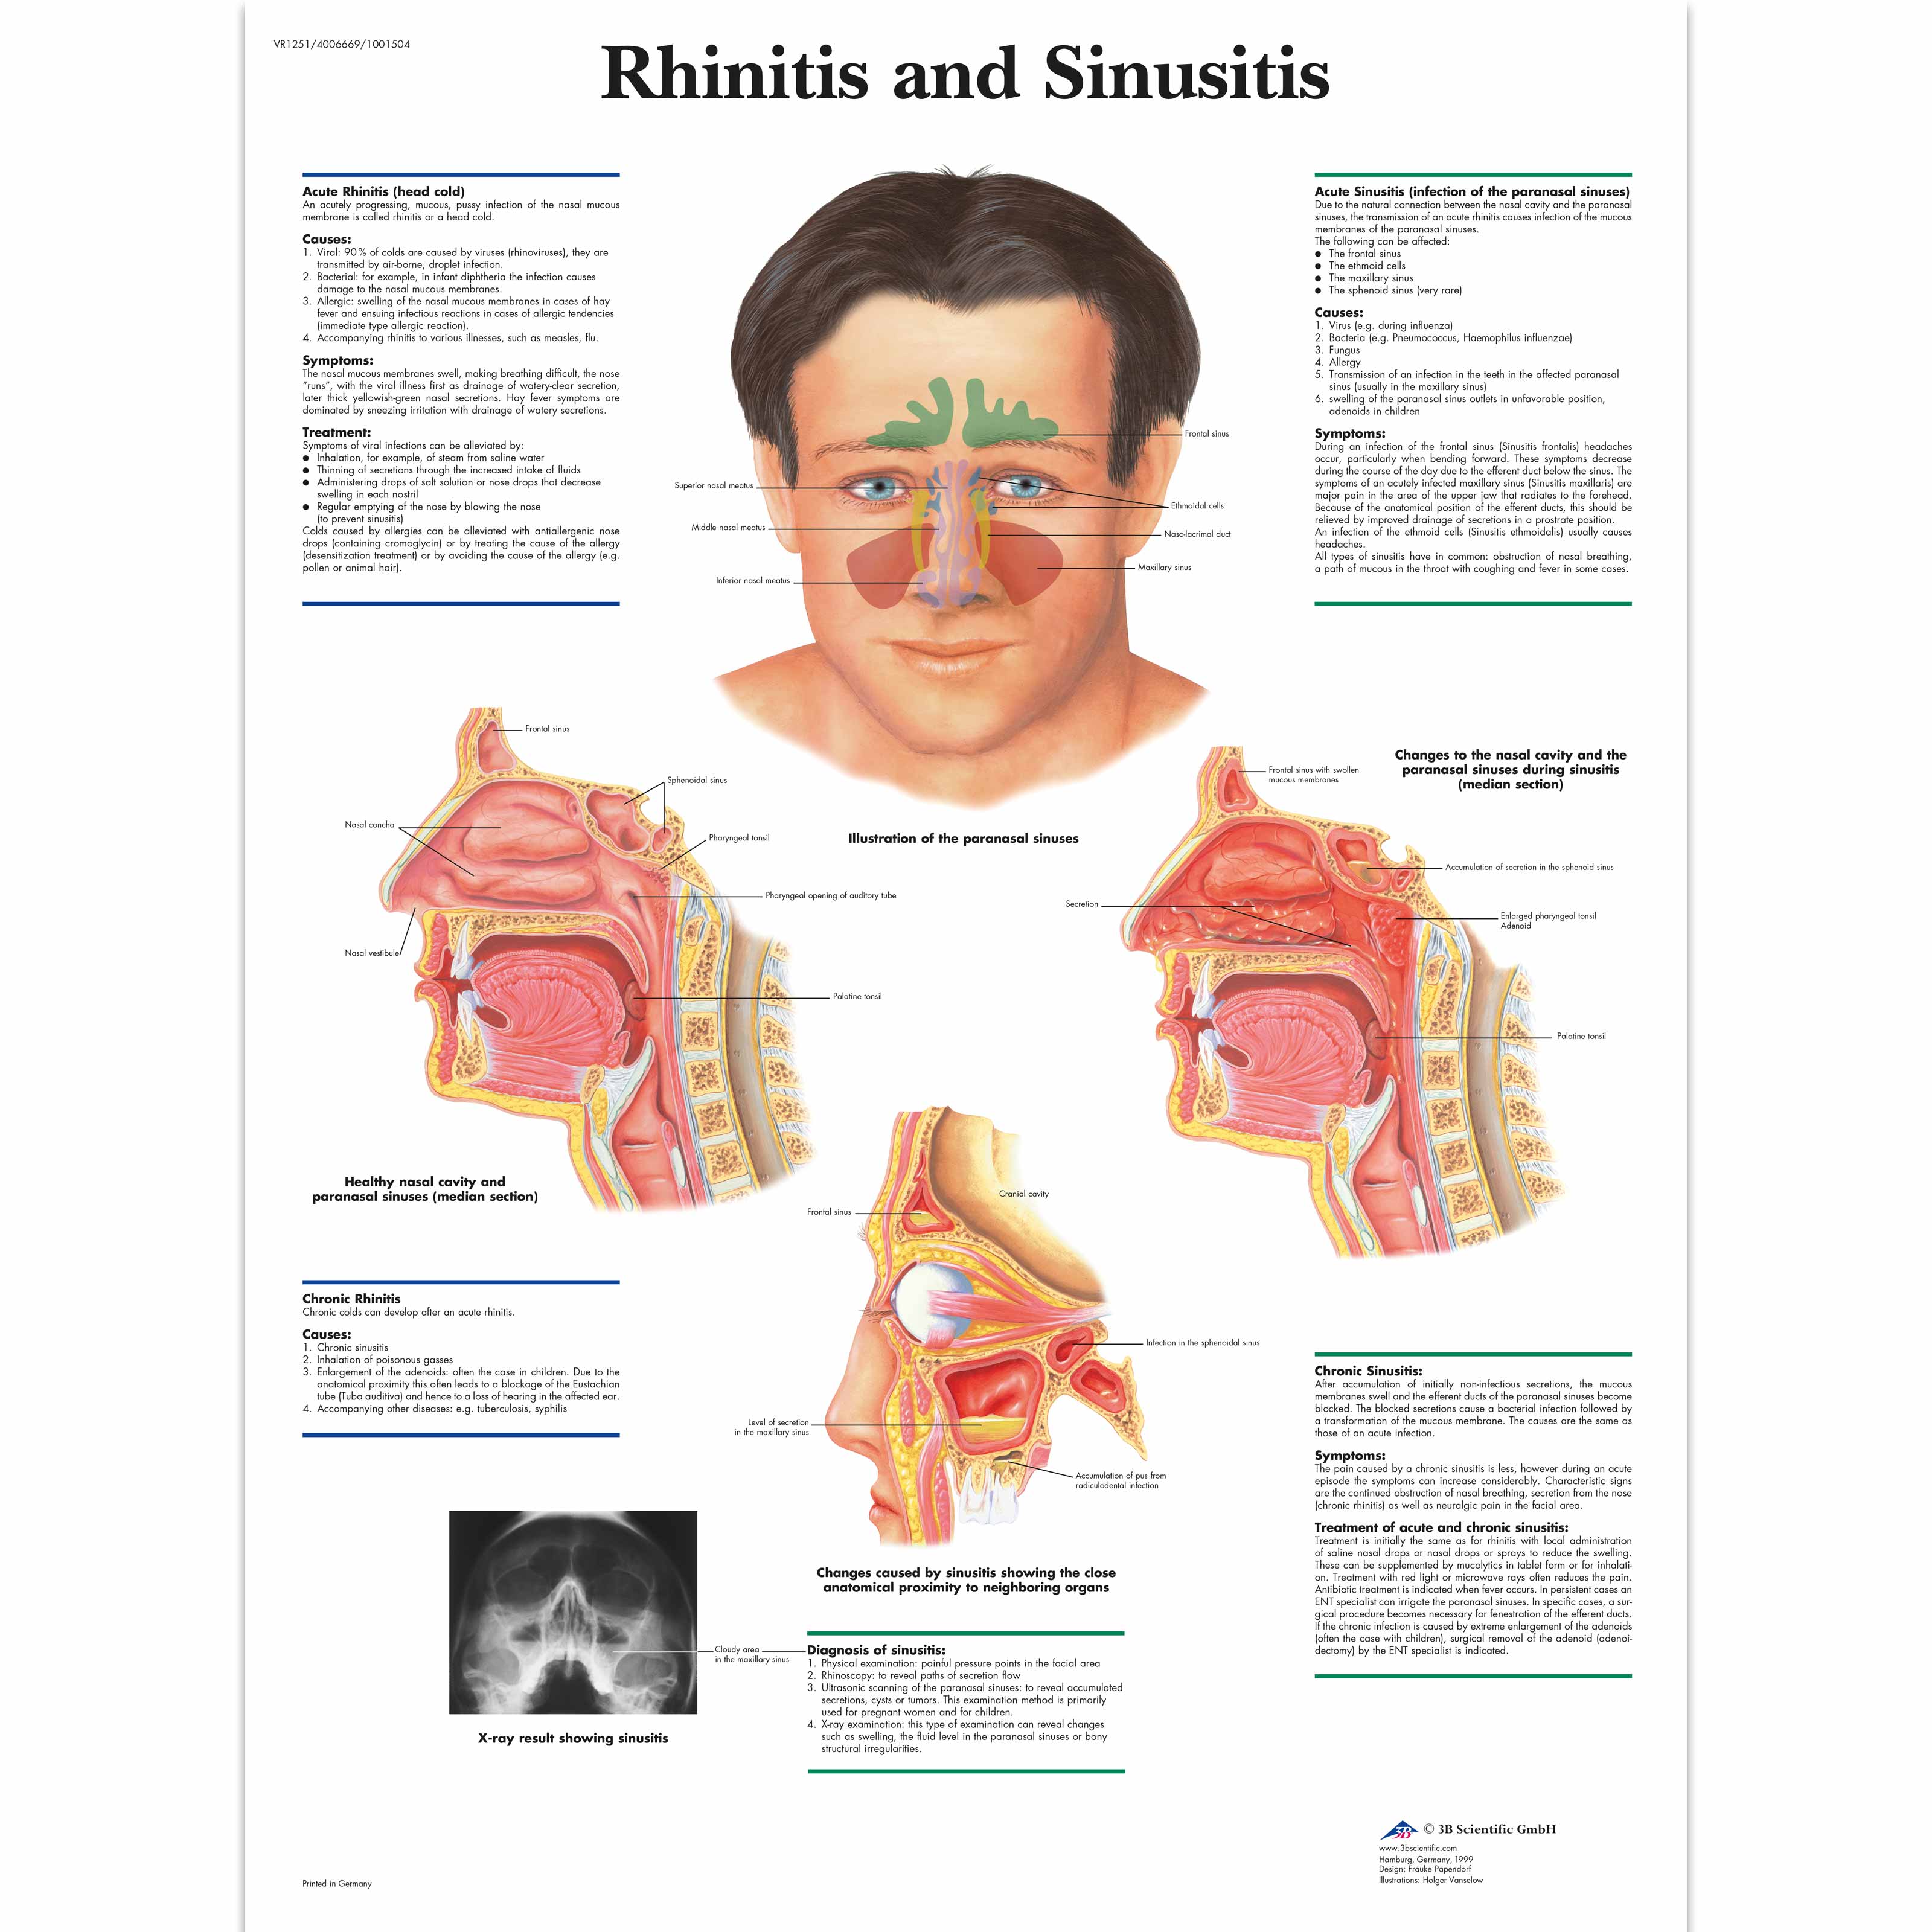 Ear Nose Throat Anatomy Chart Poster Laminated Ubicaciondepersonas